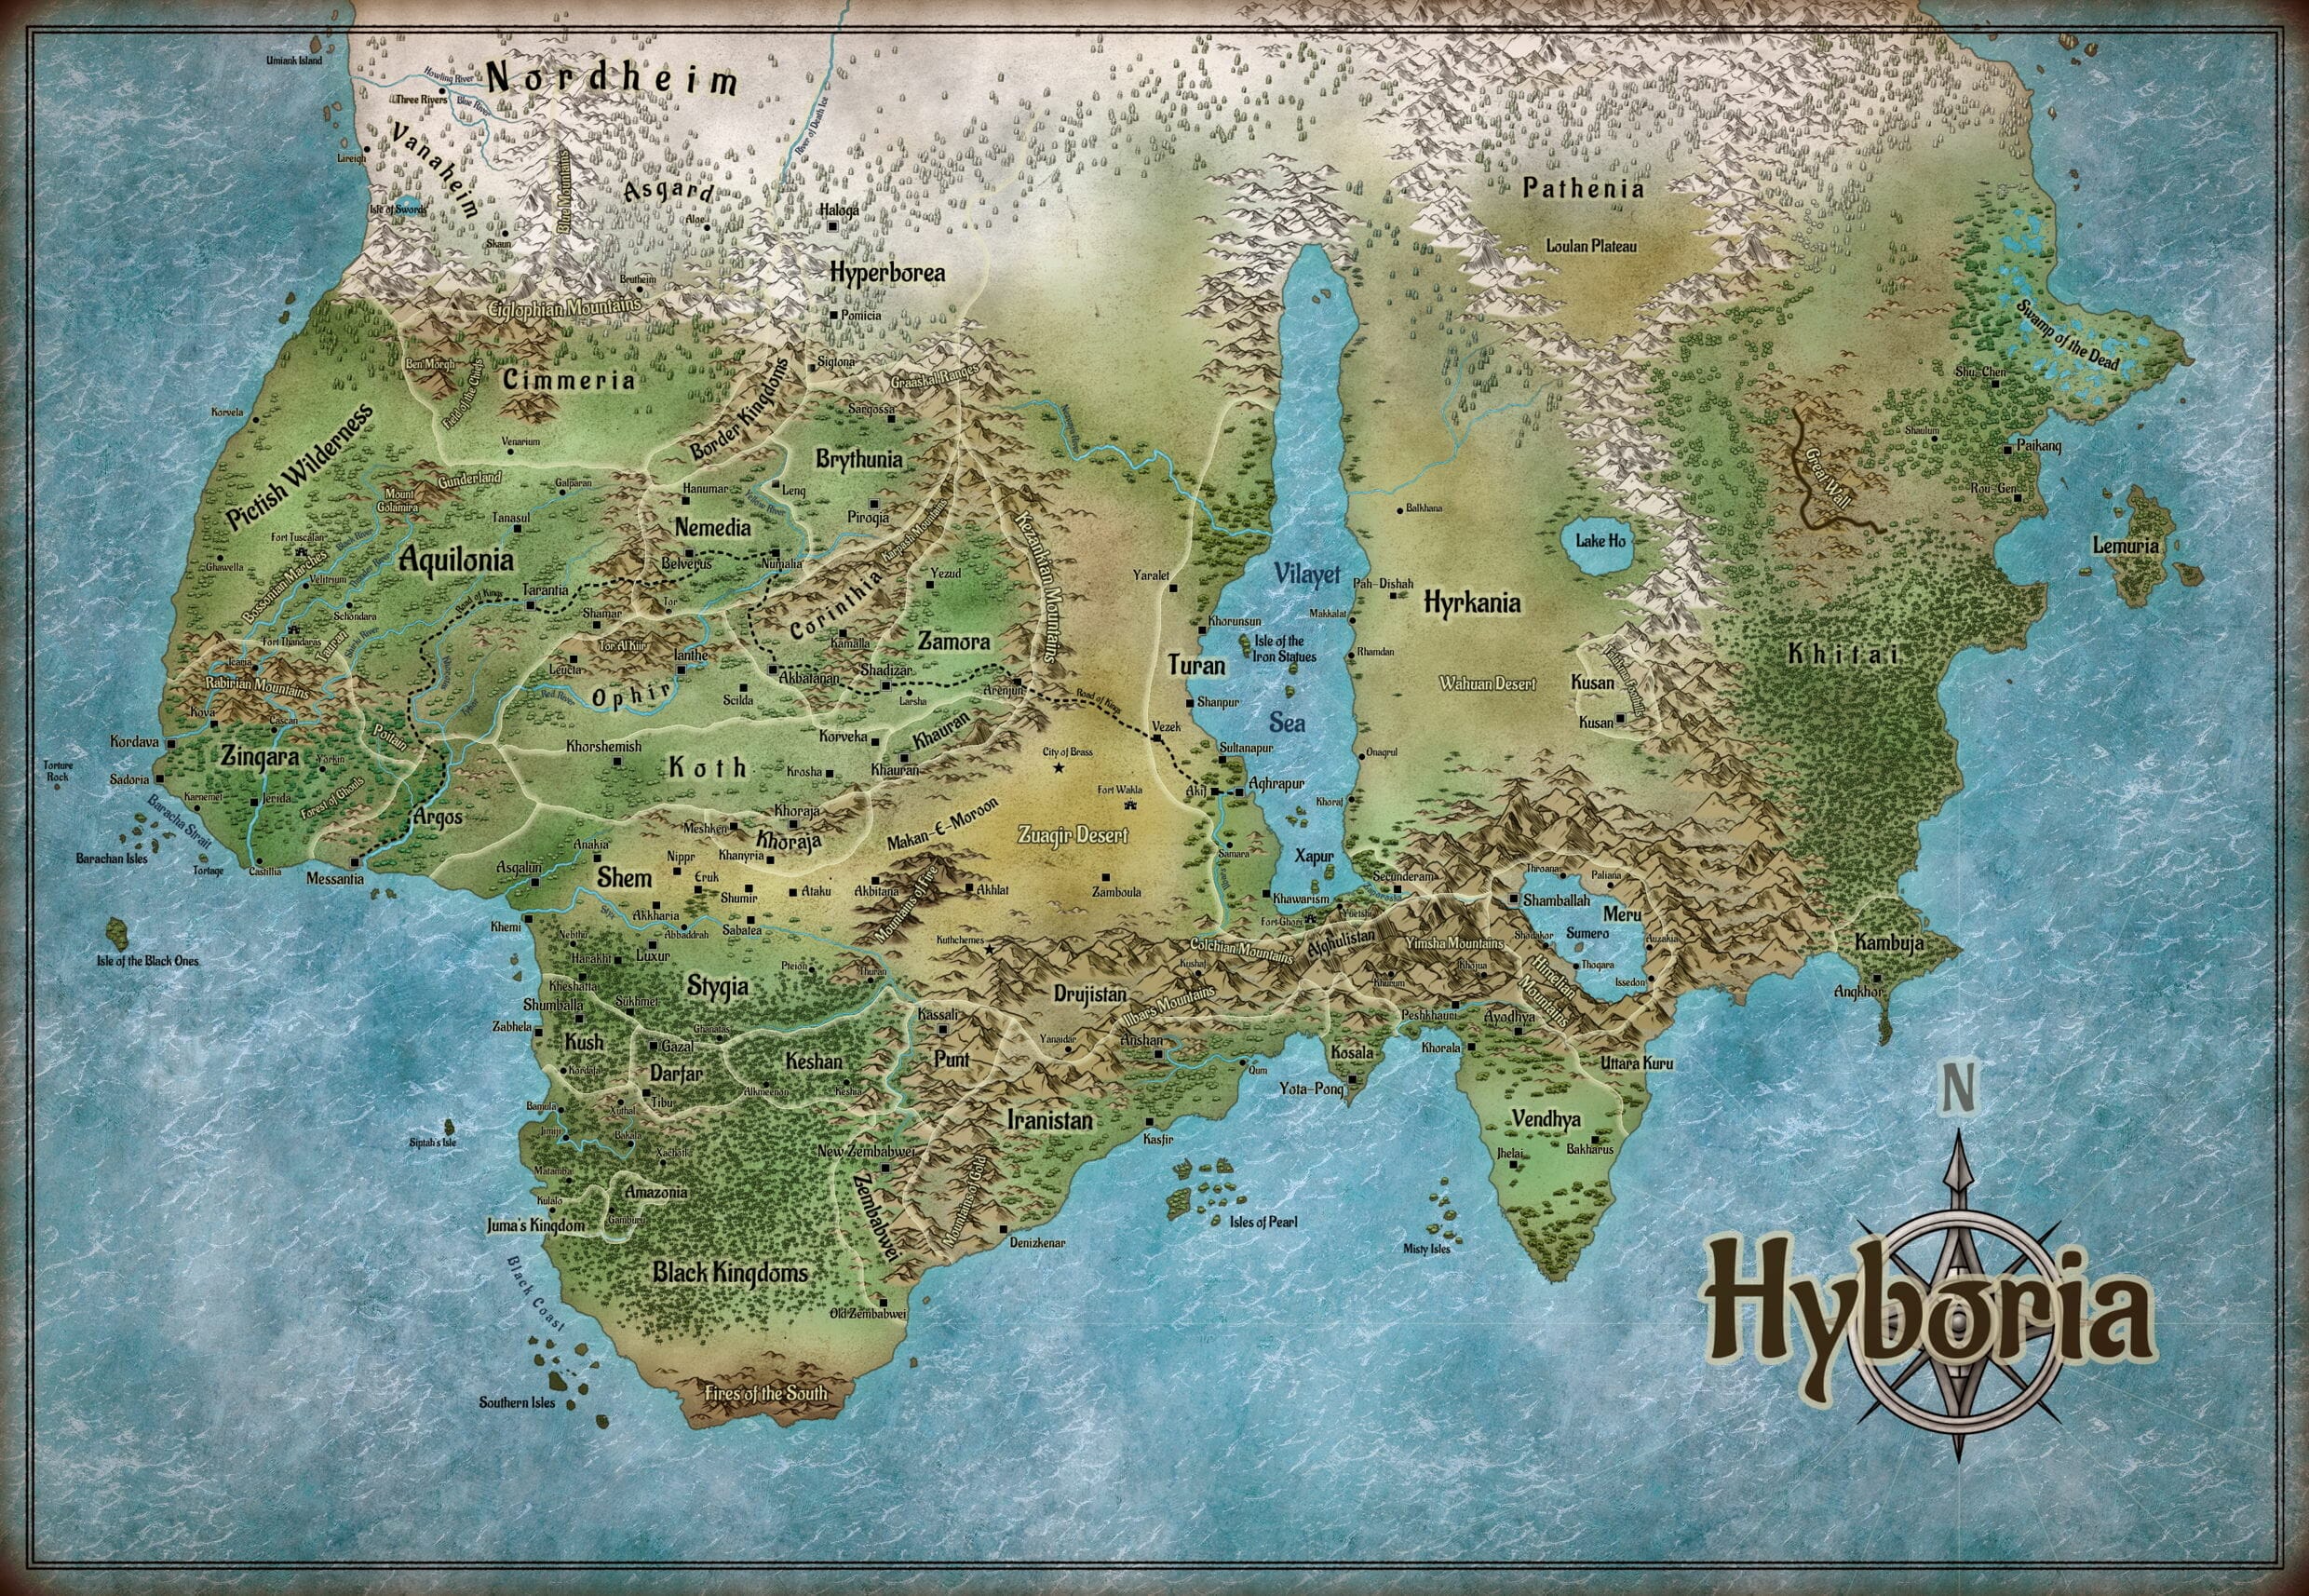 https://images-geeknative-com.exactdn.com/wp-content/uploads/2021/03/10003148/Hyborian-Age-of-Conan-the-Barbarian-map.jpg?strip=all&lossy=1&ssl=1